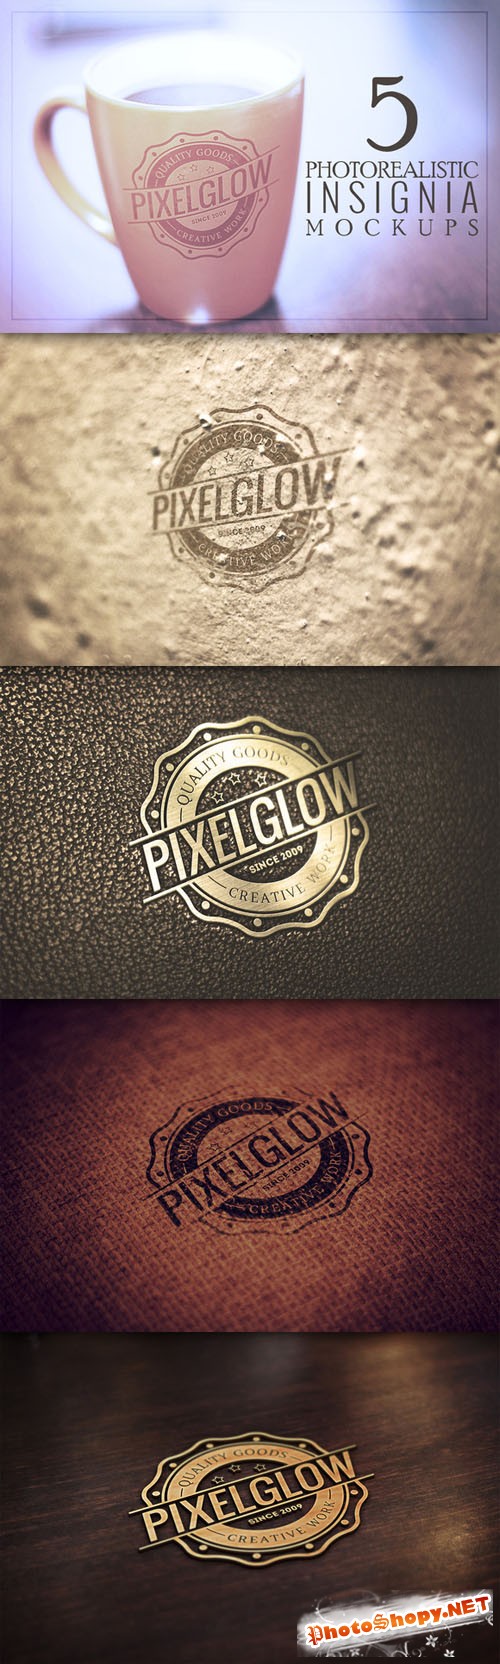 CreativeMarket - Pixelglow Logo/Insignia Mockups